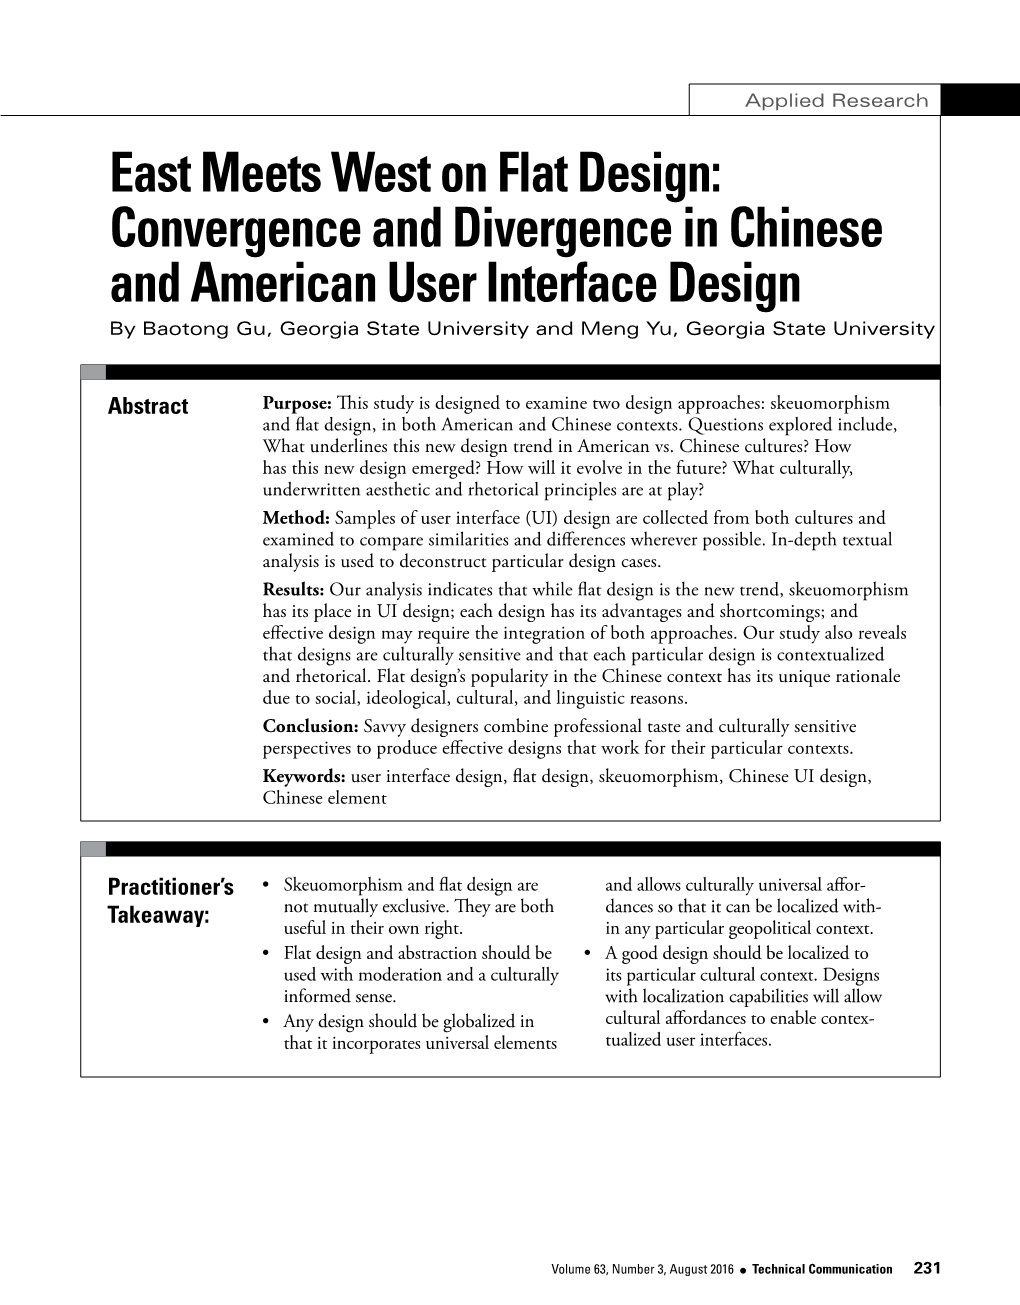 East Meets West on Flat Design